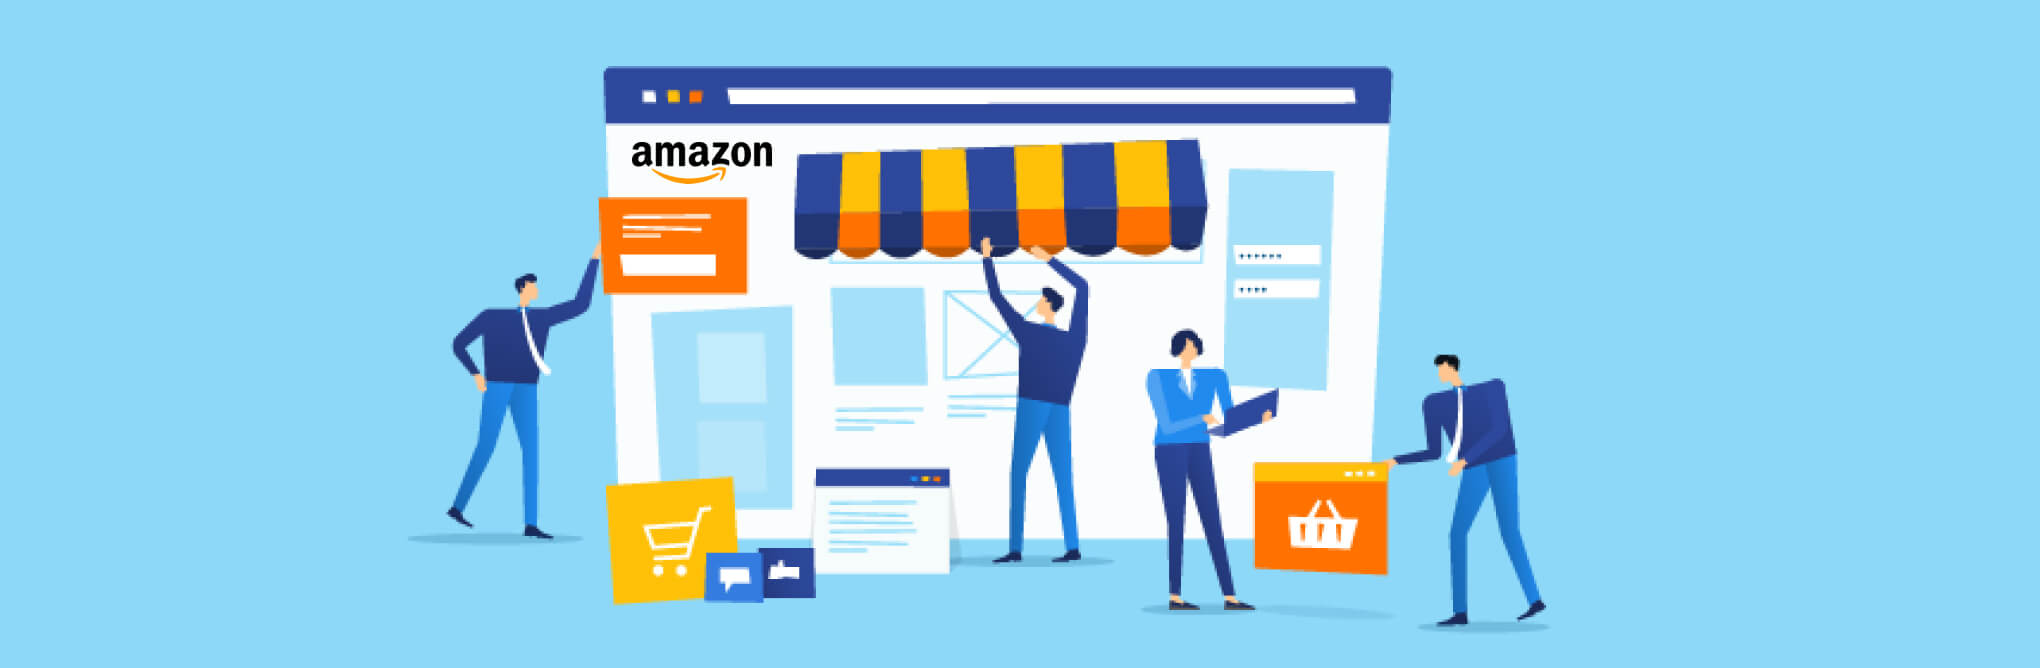 Amazon shopping